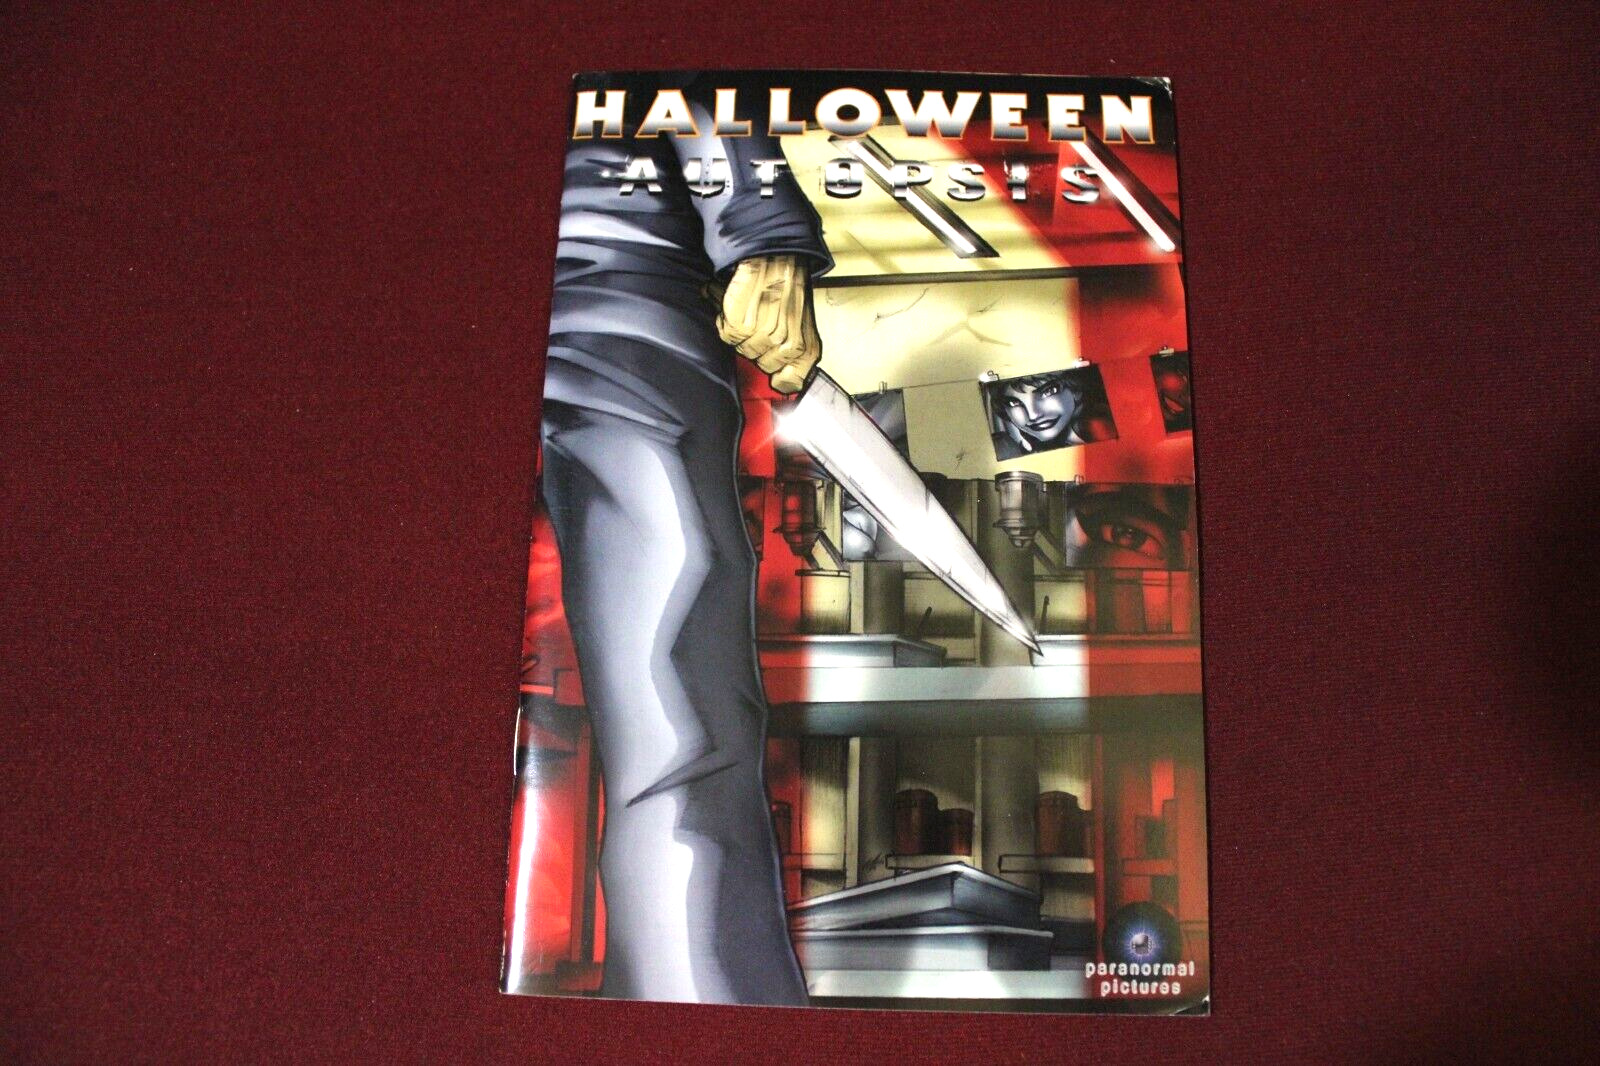 Halloween Autopsis Promotional Comic 2006 Paranormal Pictures Stefan Hutchinson